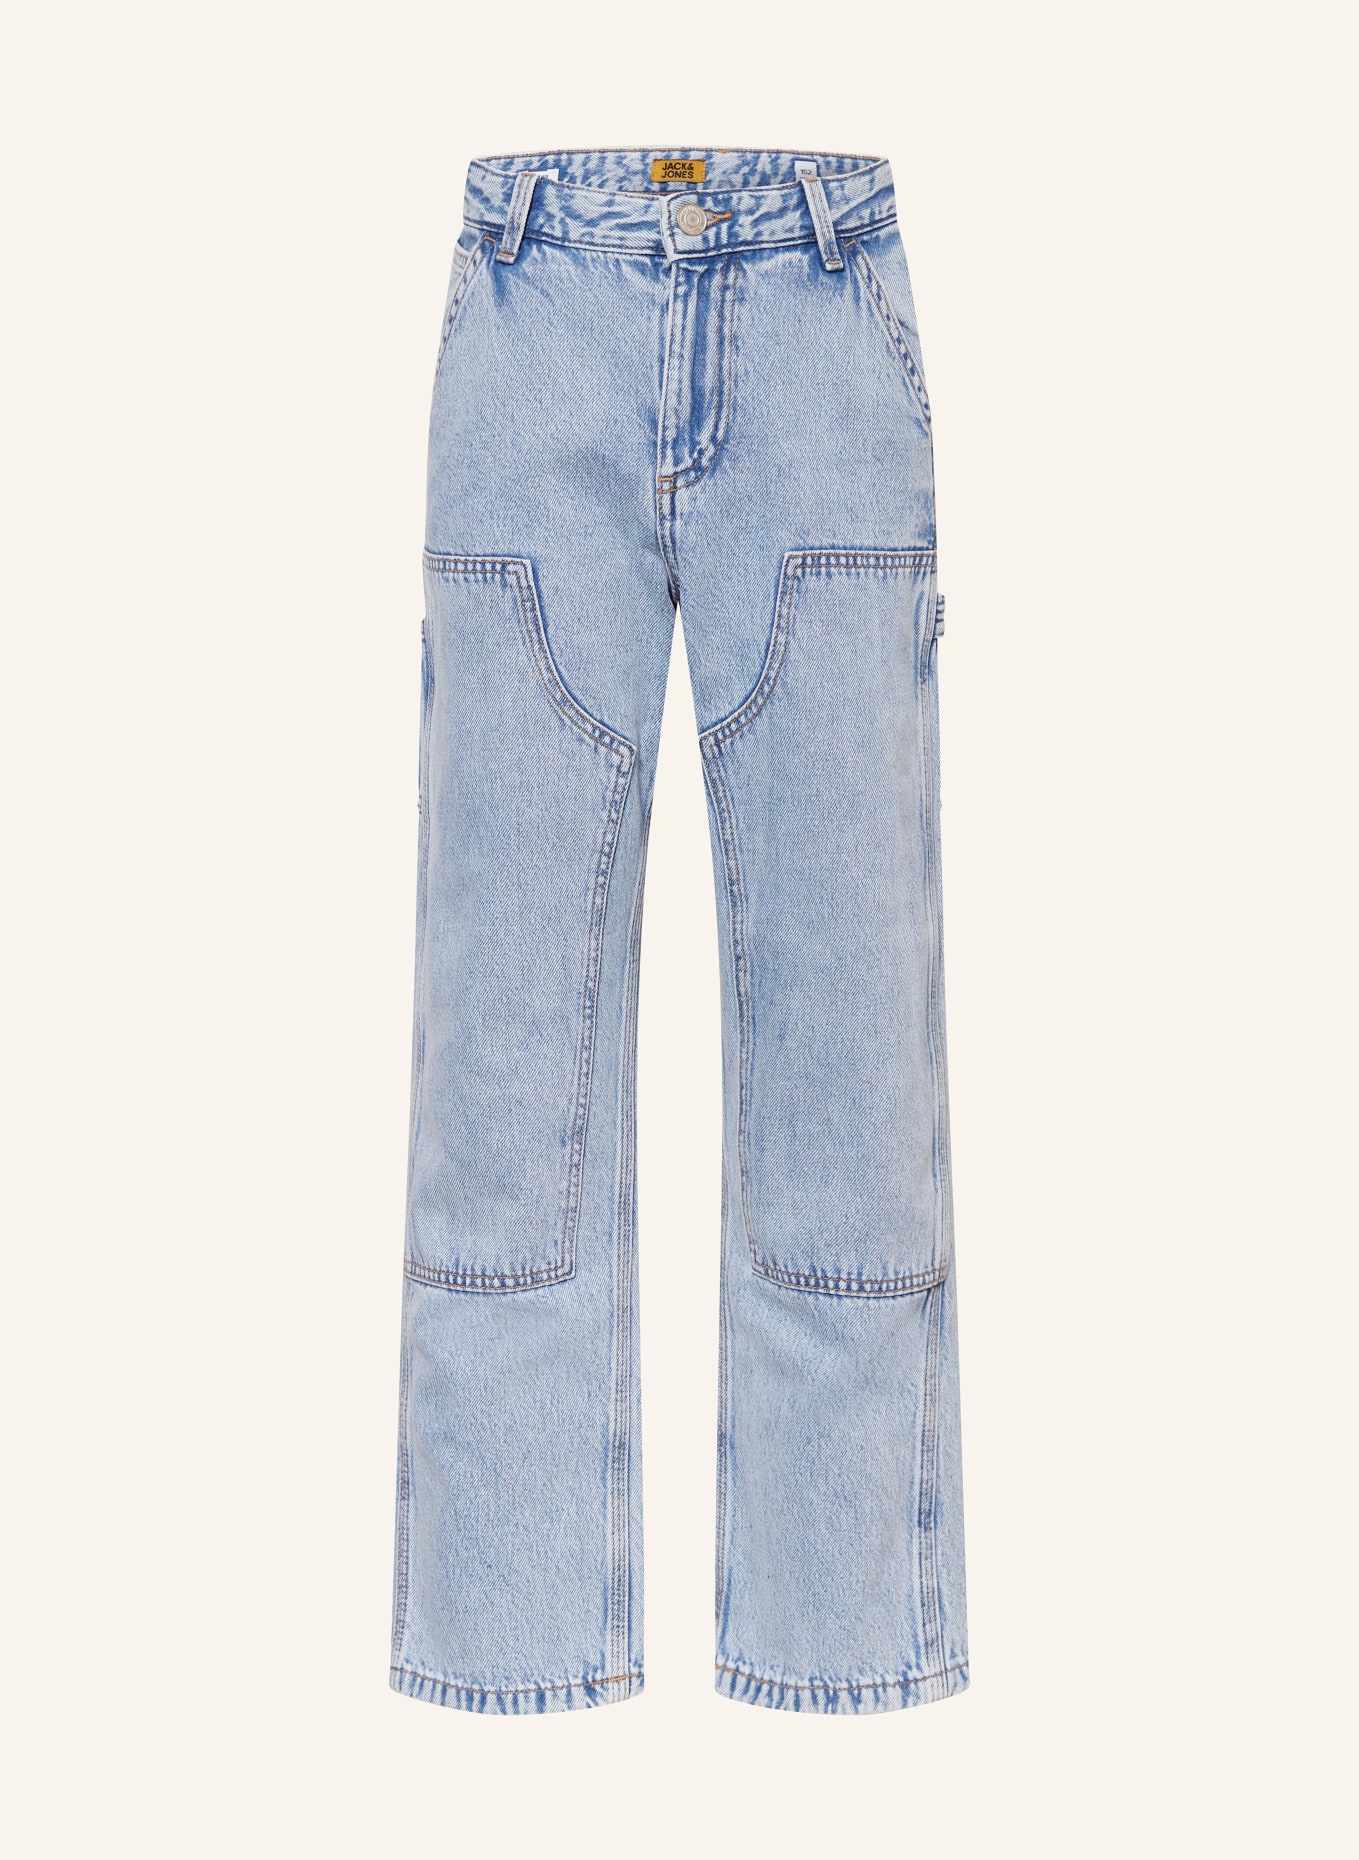 JACK&JONES Jeans CHRIS Relaxed Fit, Farbe: HELLBLAU (Bild 1)